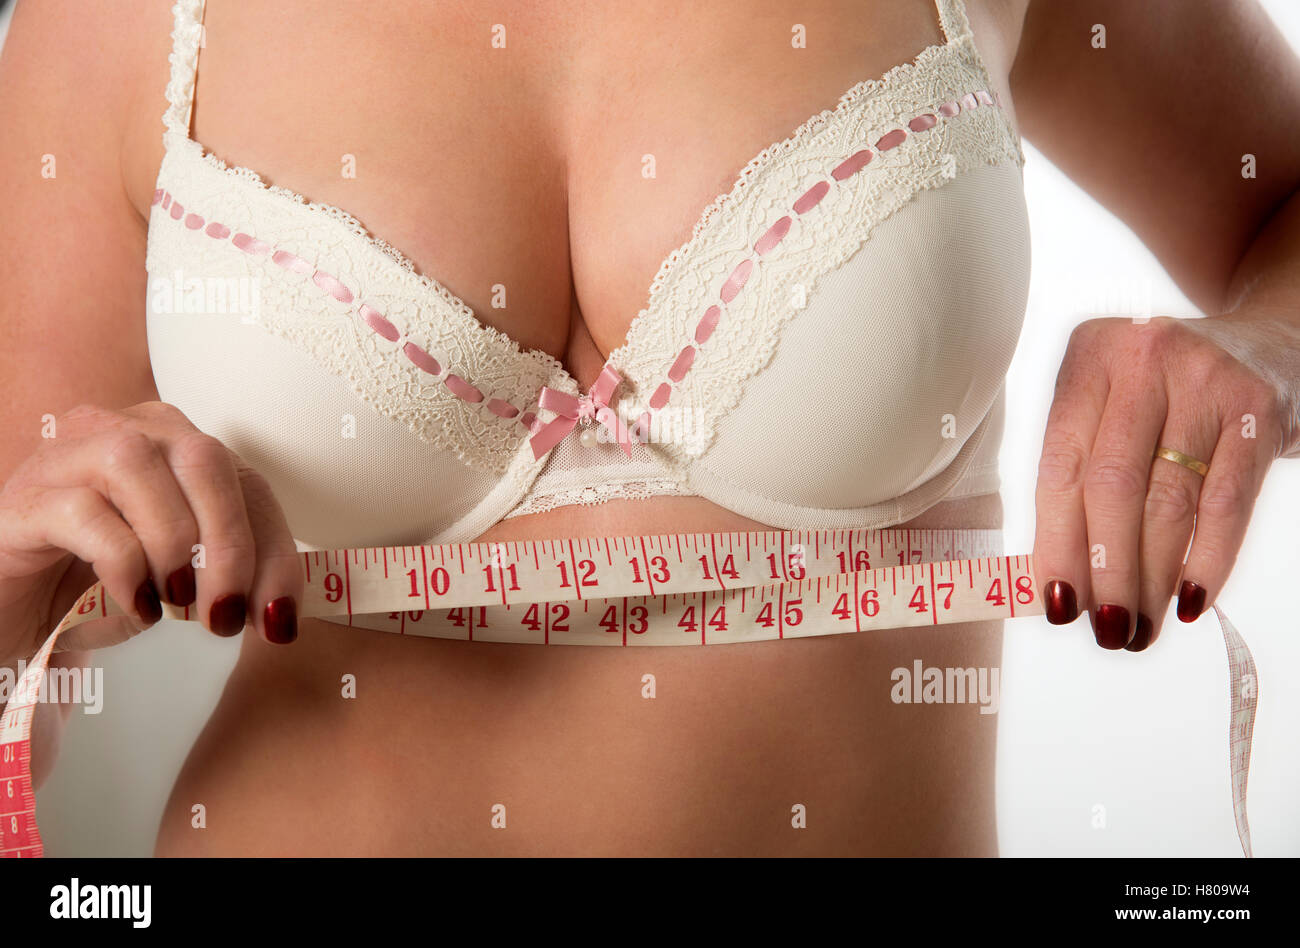 108 Woman Wearing Bra Side View Stock Photos - Free & Royalty-Free